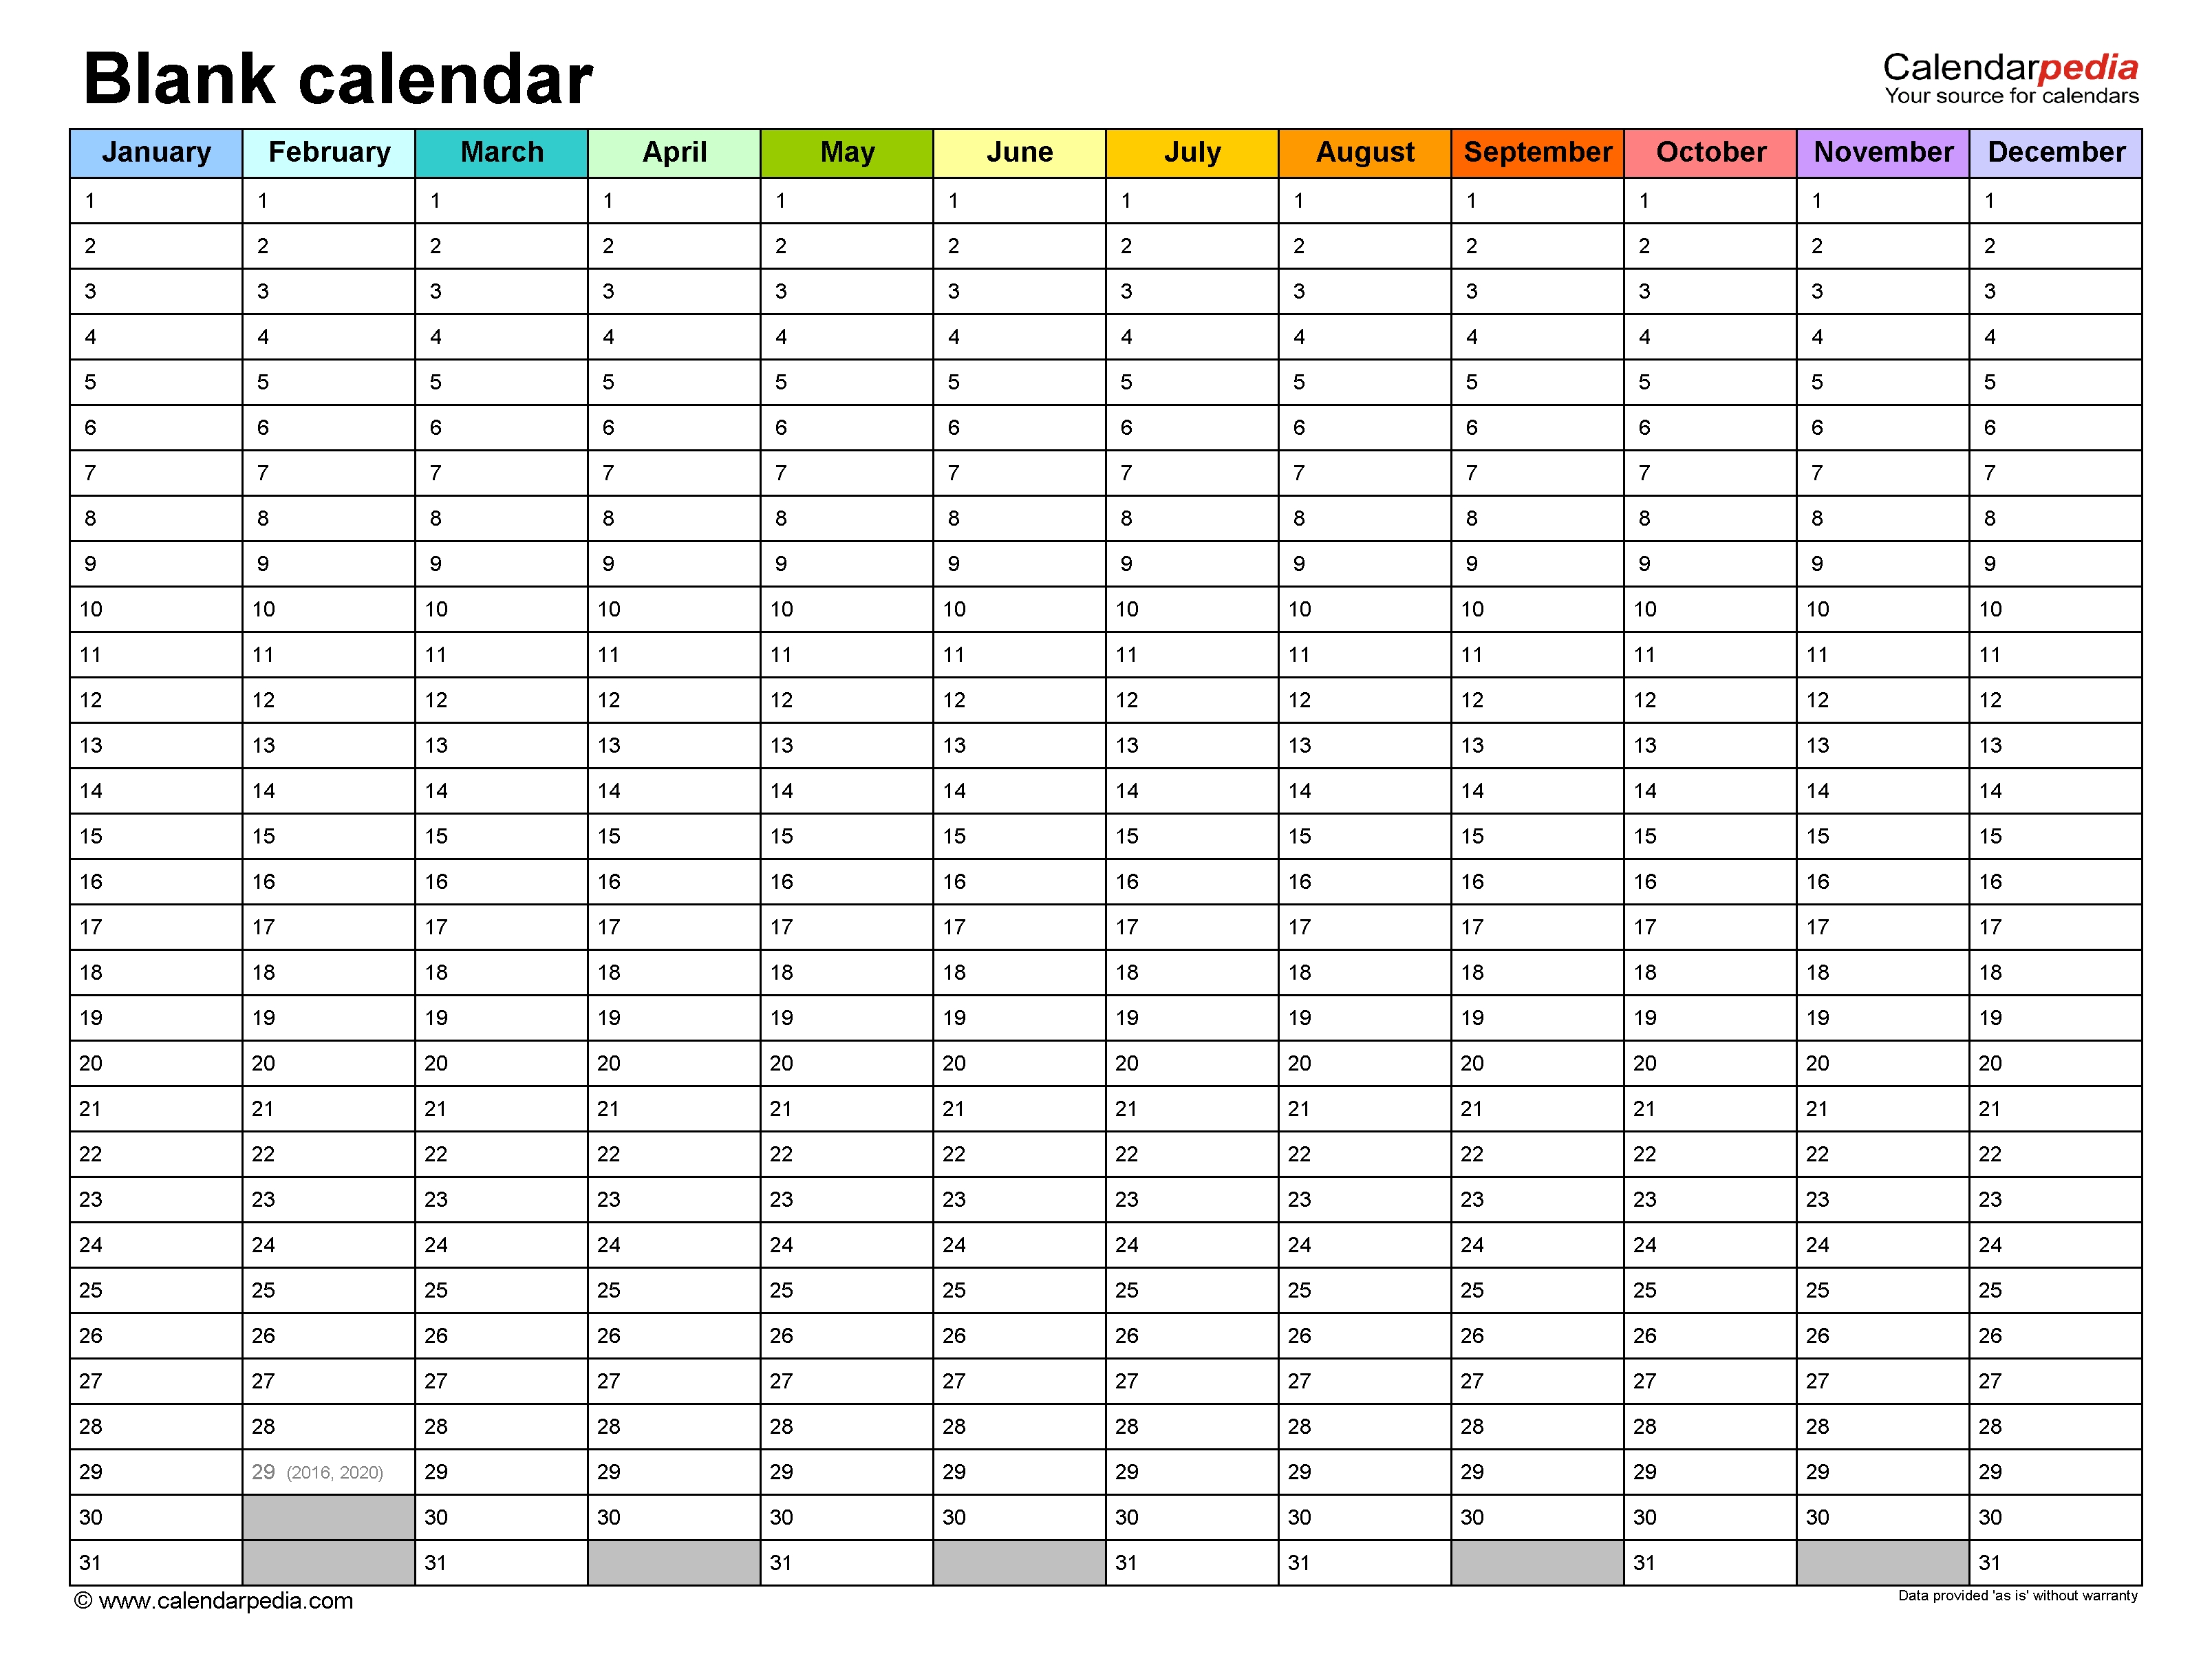 Blank Calendars - Free Printable Microsoft Word Templates Year Long Calendar Template